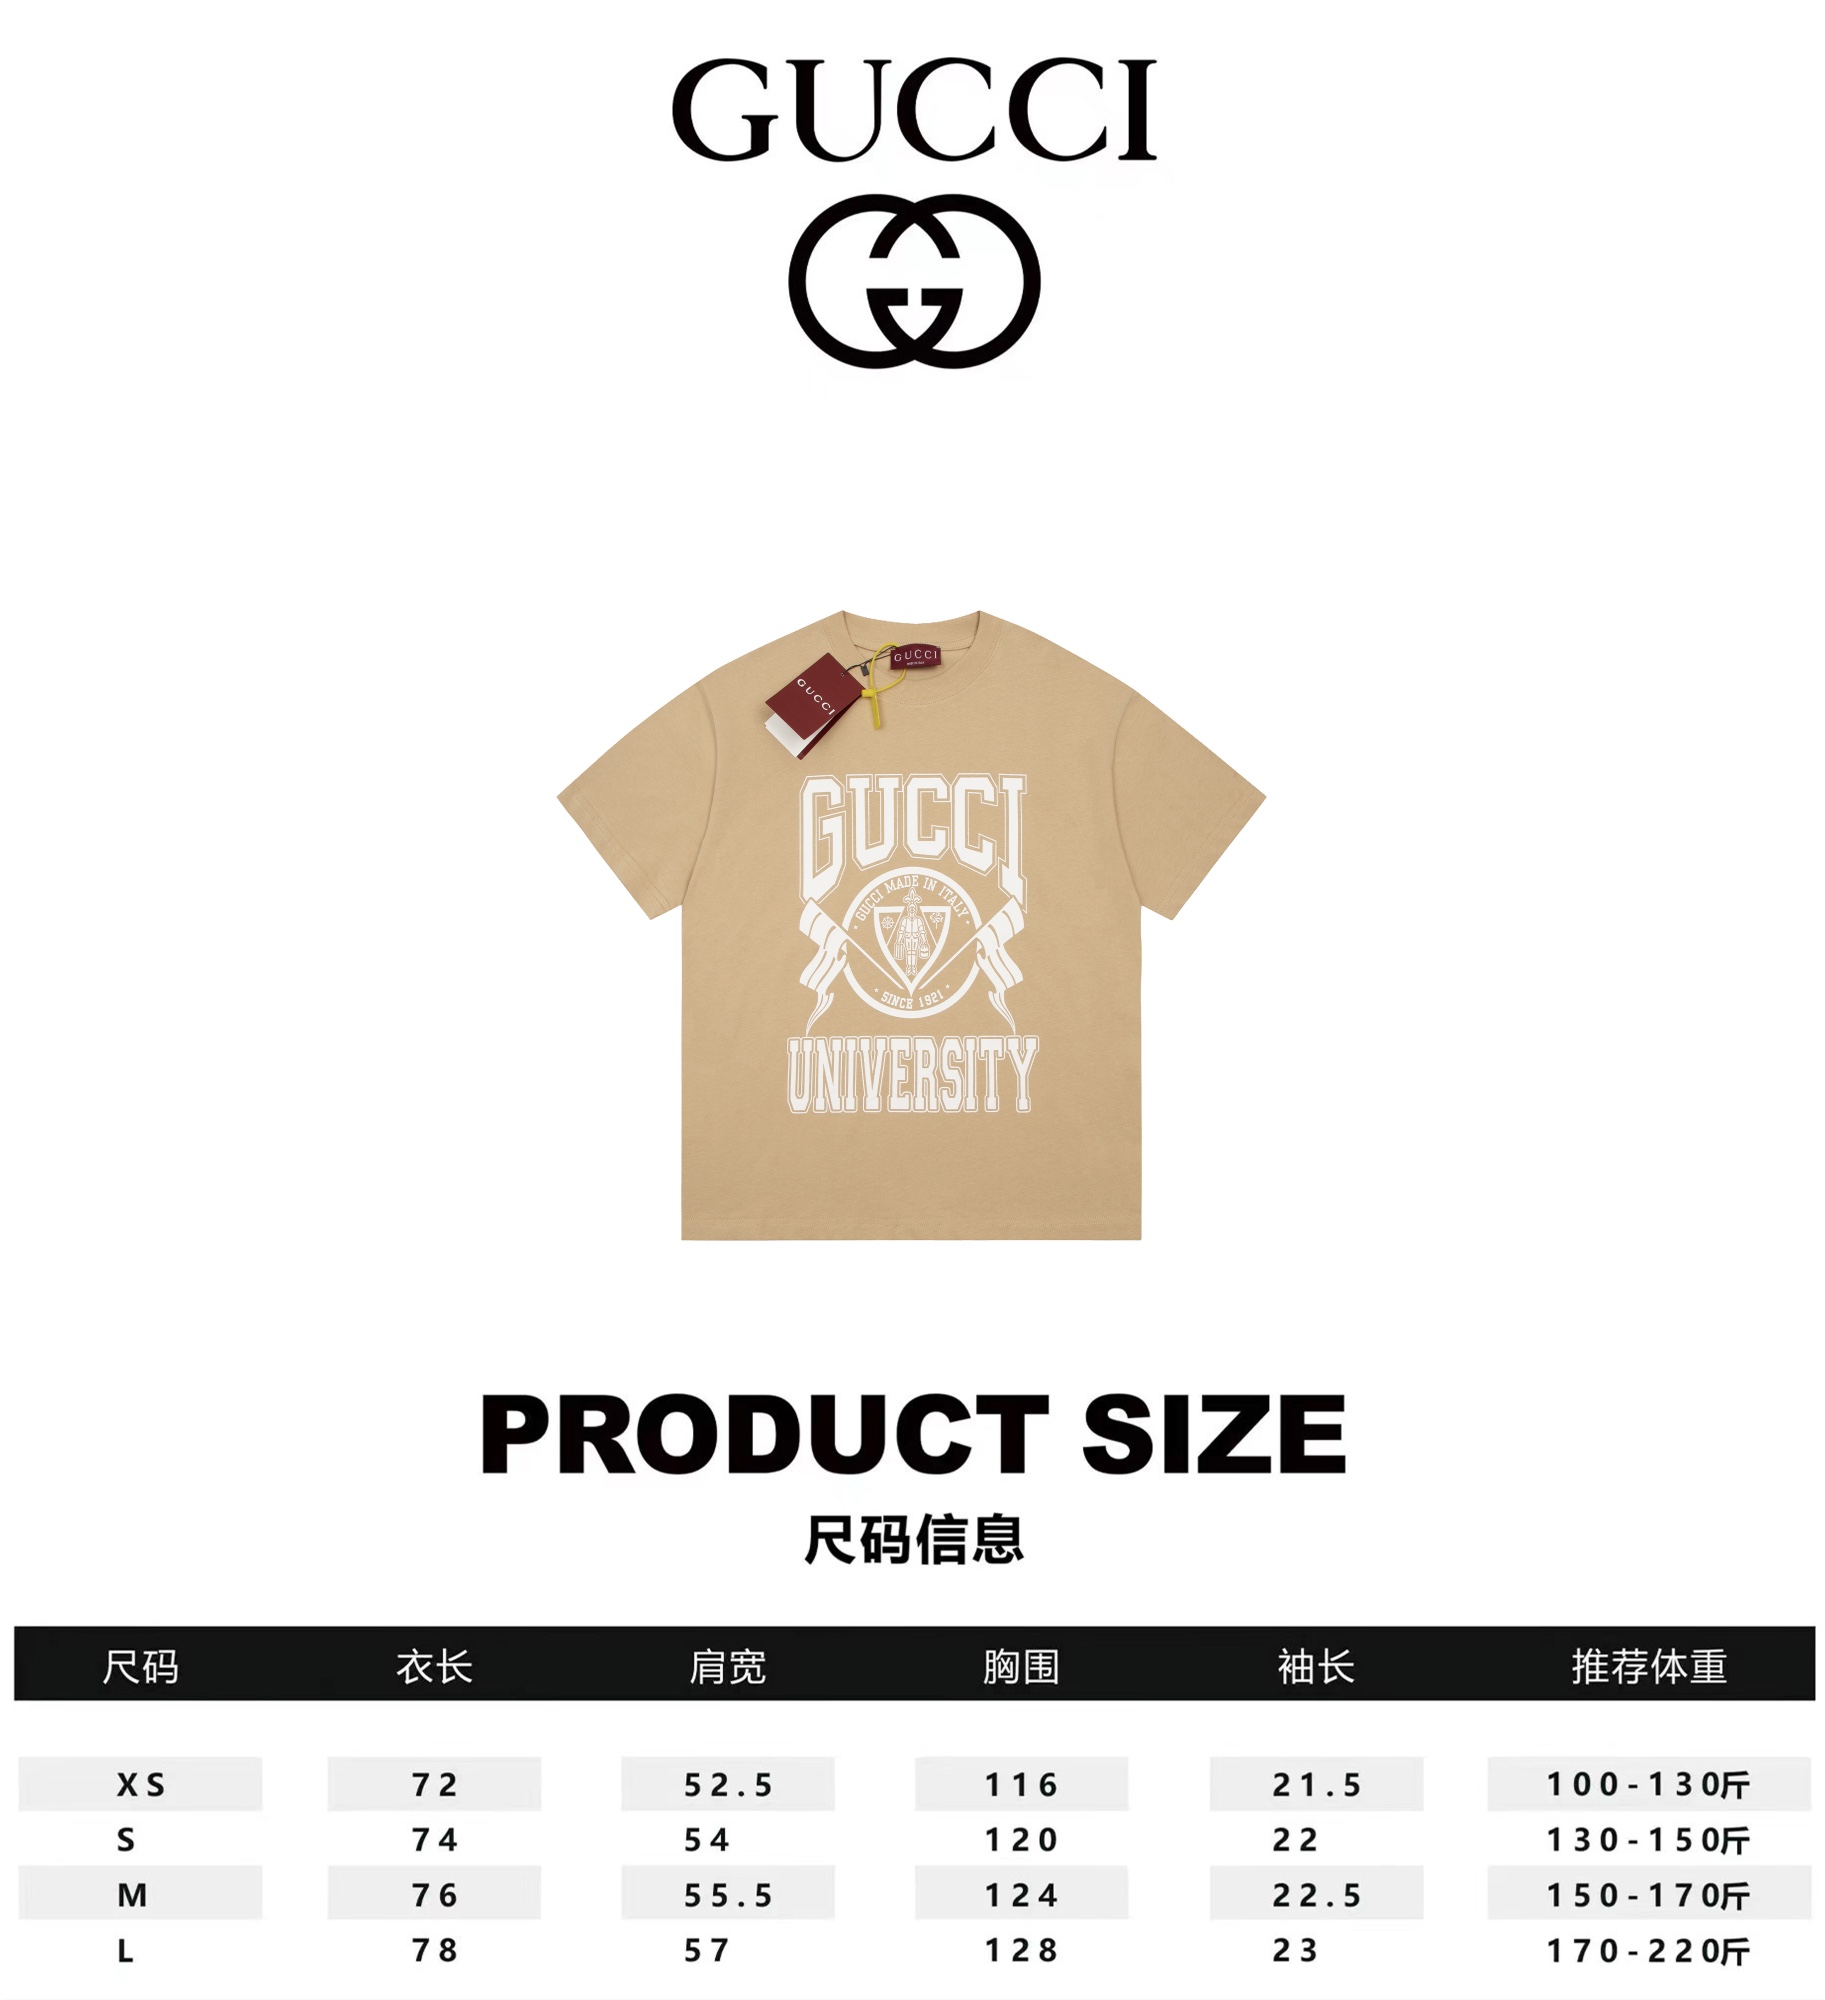 Gucci Clothing T-Shirt Printing Short Sleeve